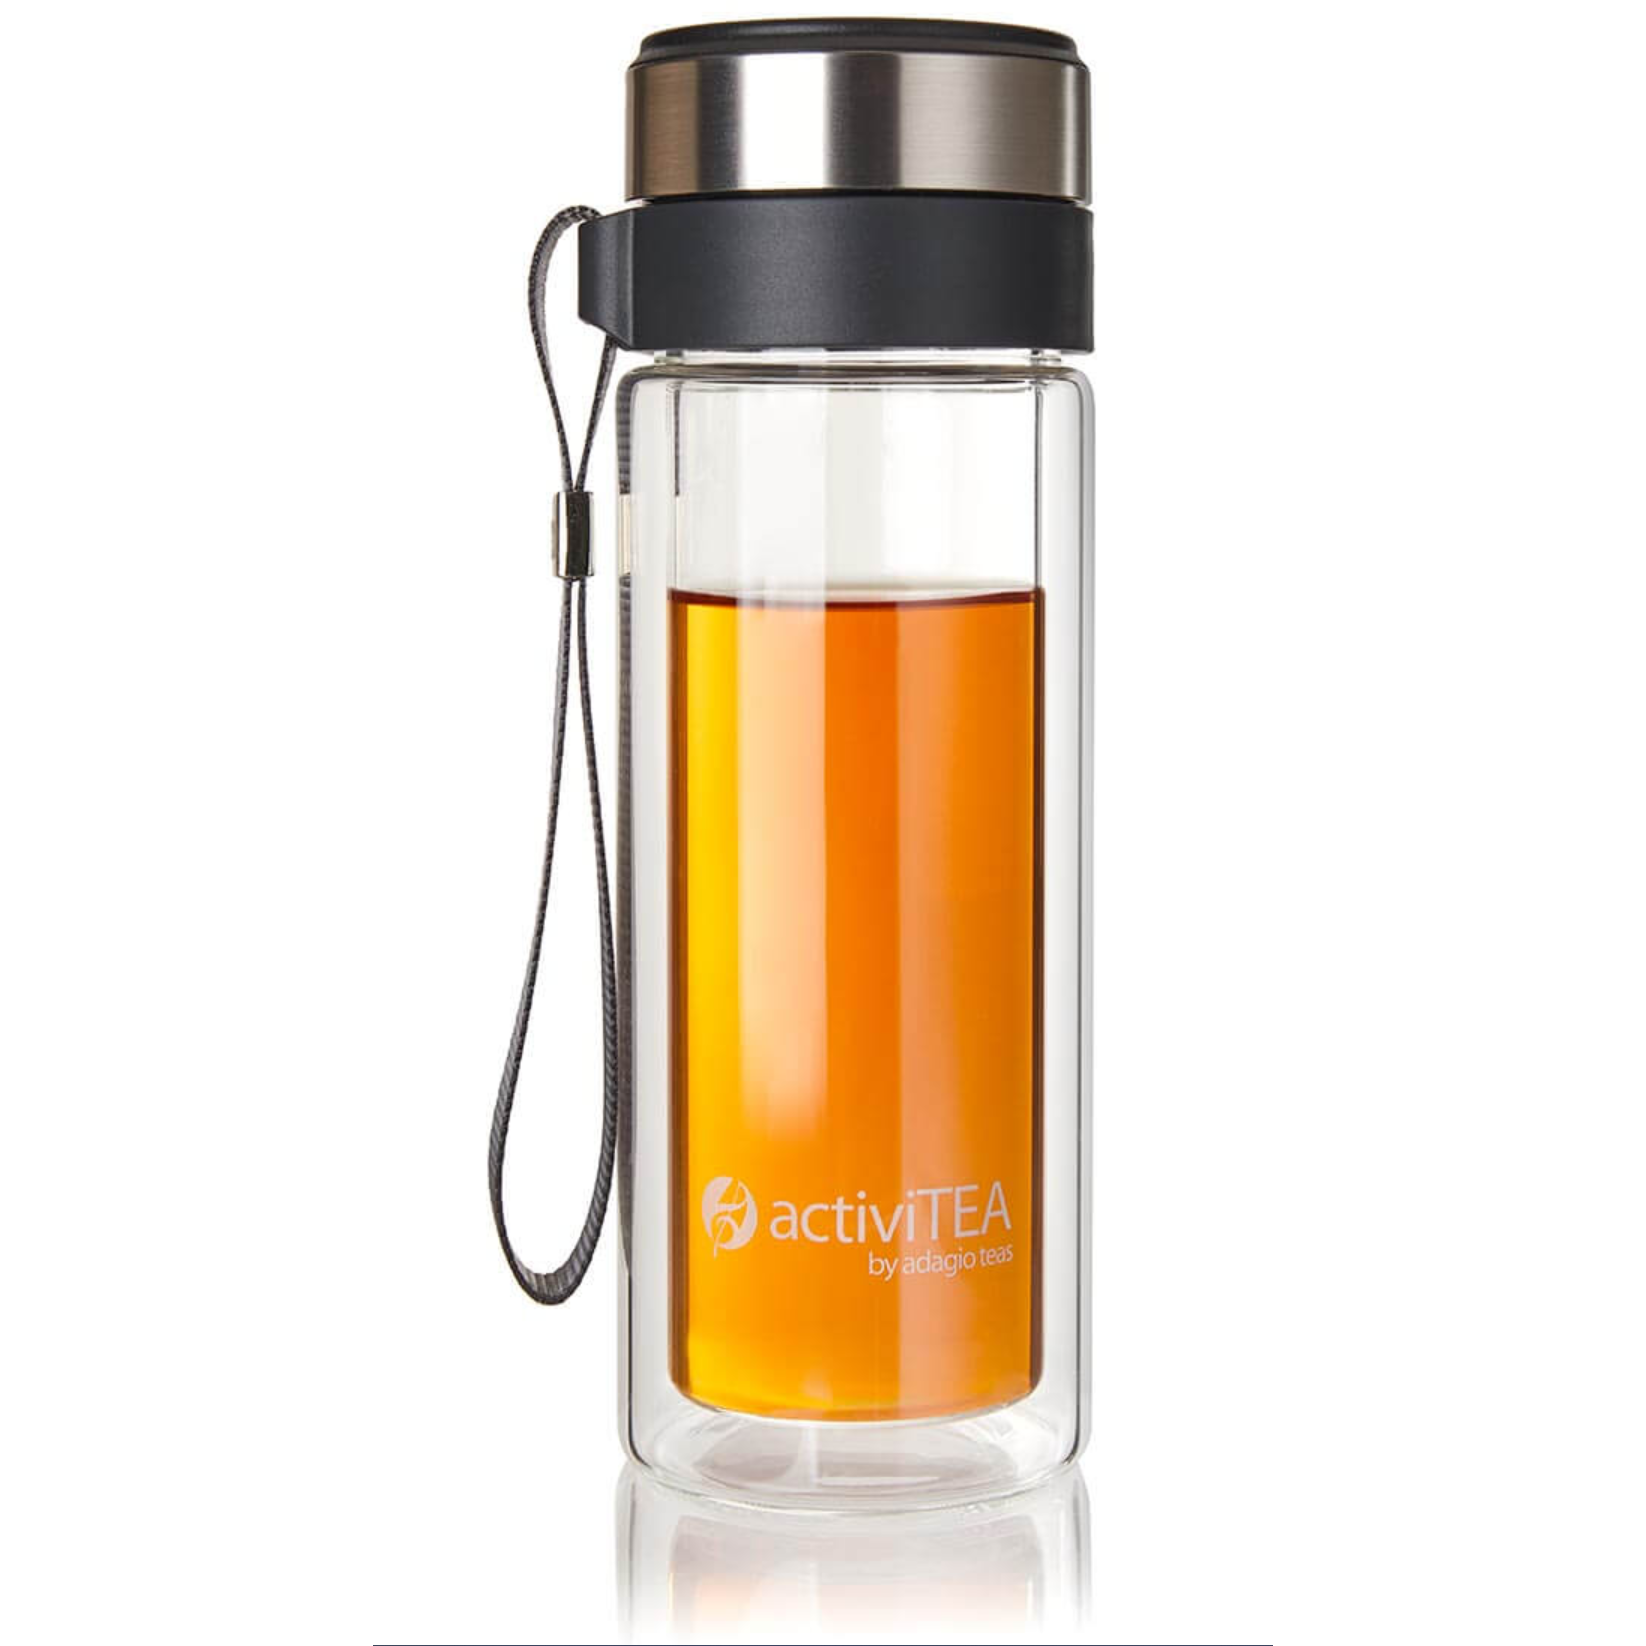 ActiviTEA Portable Tea Tumbler – AURA salt cave and wellness